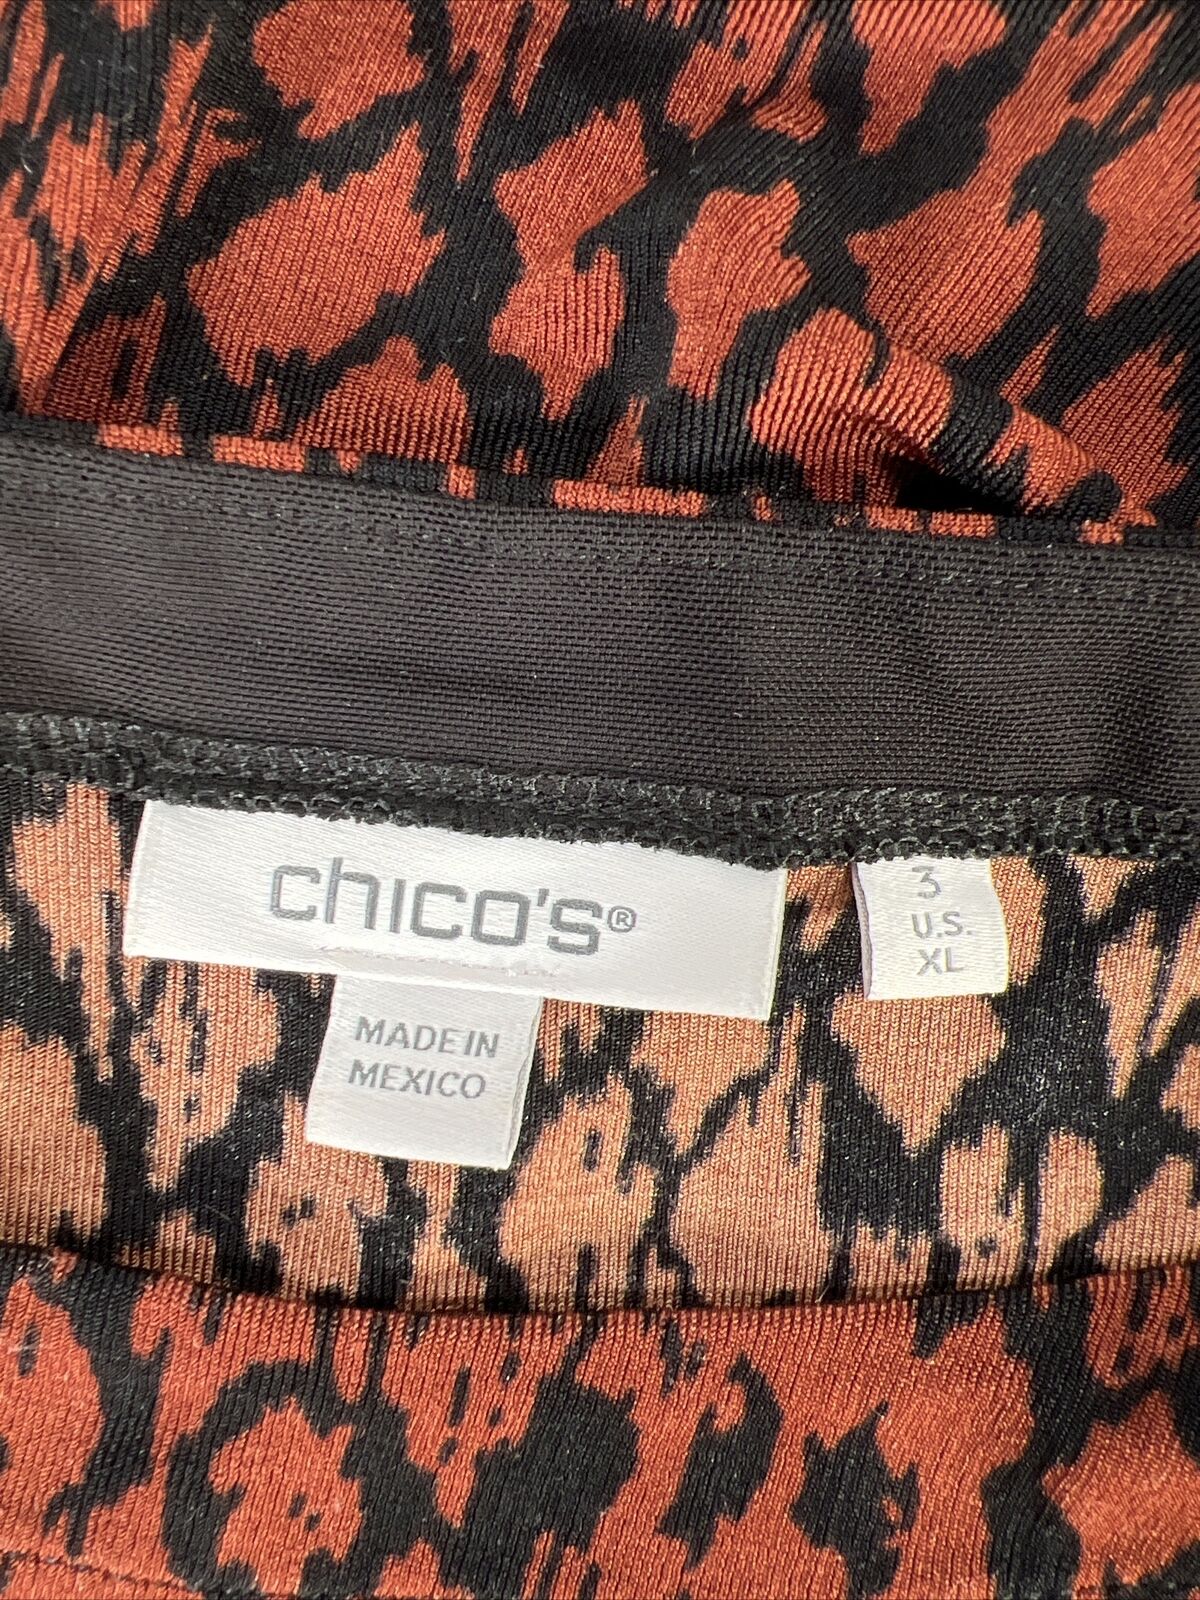 Chico's Blusa de manga 3/4 de color naranja oscuro para mujer - 3/US XL